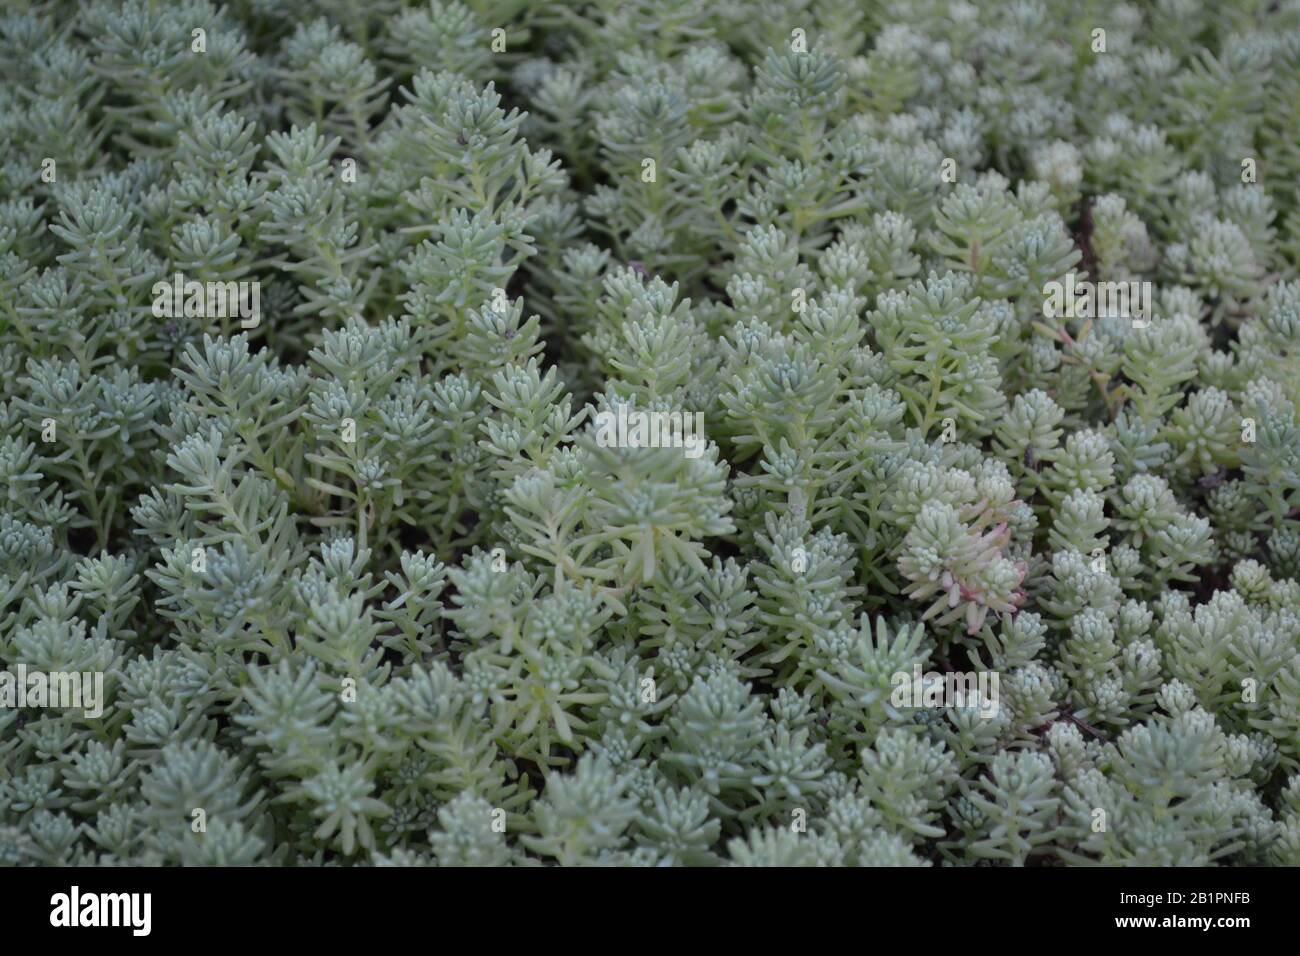 Stonecrop. Hare cabbage. Sedum. Green moss. Decorative grassy carpet. Green flower bed decoration. Garden. A beautiful tender plant. Green background. Stock Photo